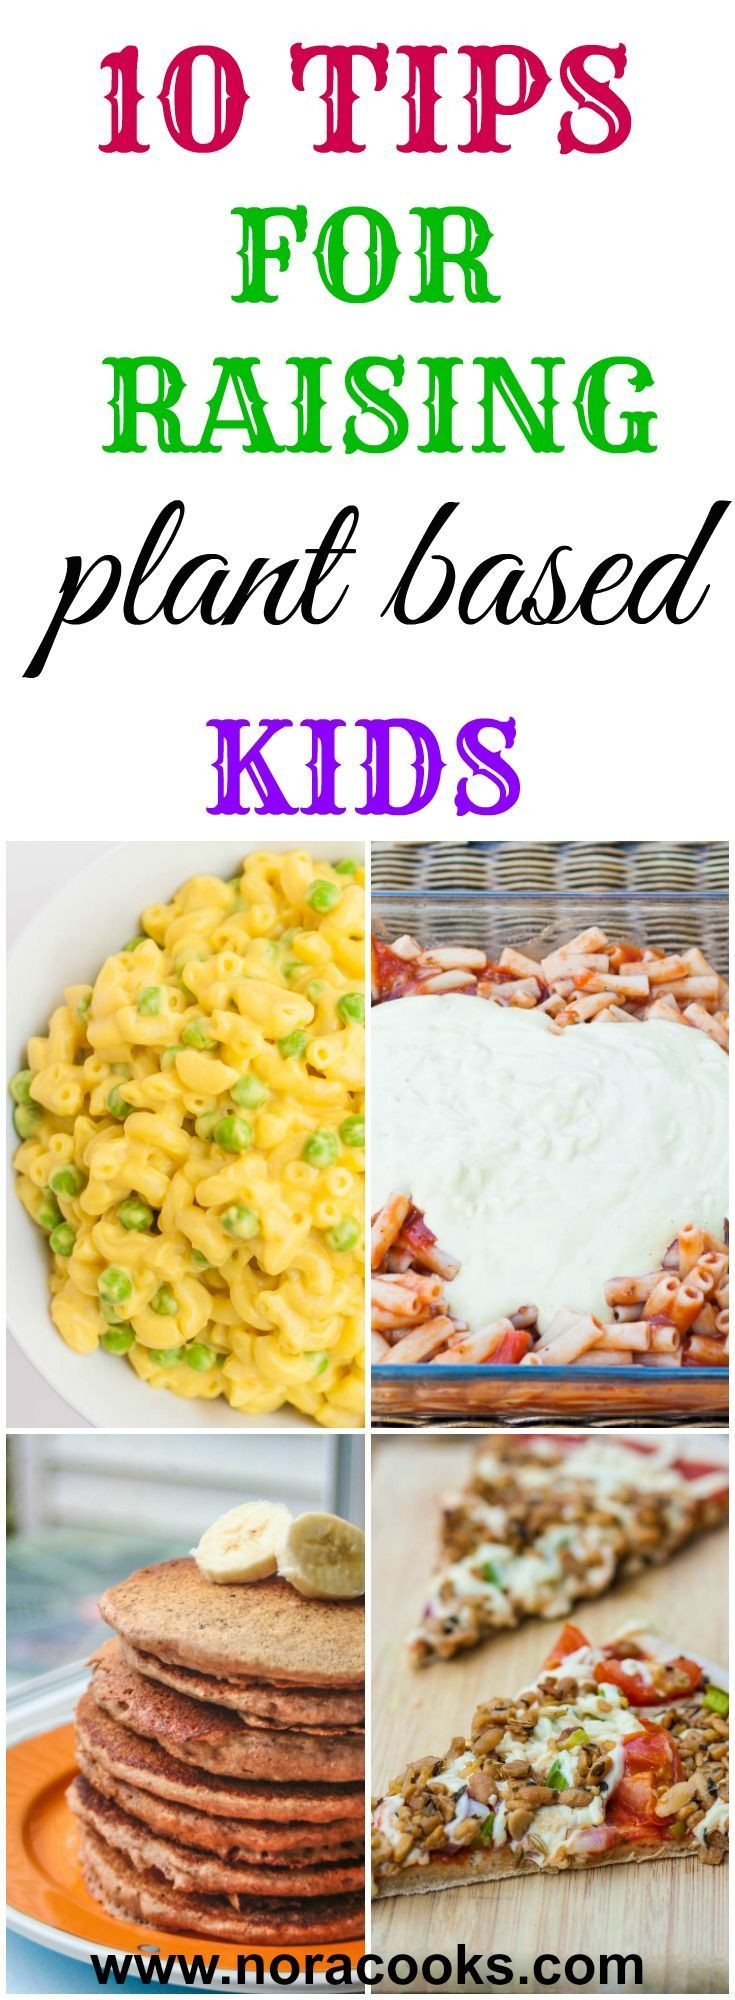 Plant Based Recipes For Kids
 10 tips for raising plant based kids meal ideas